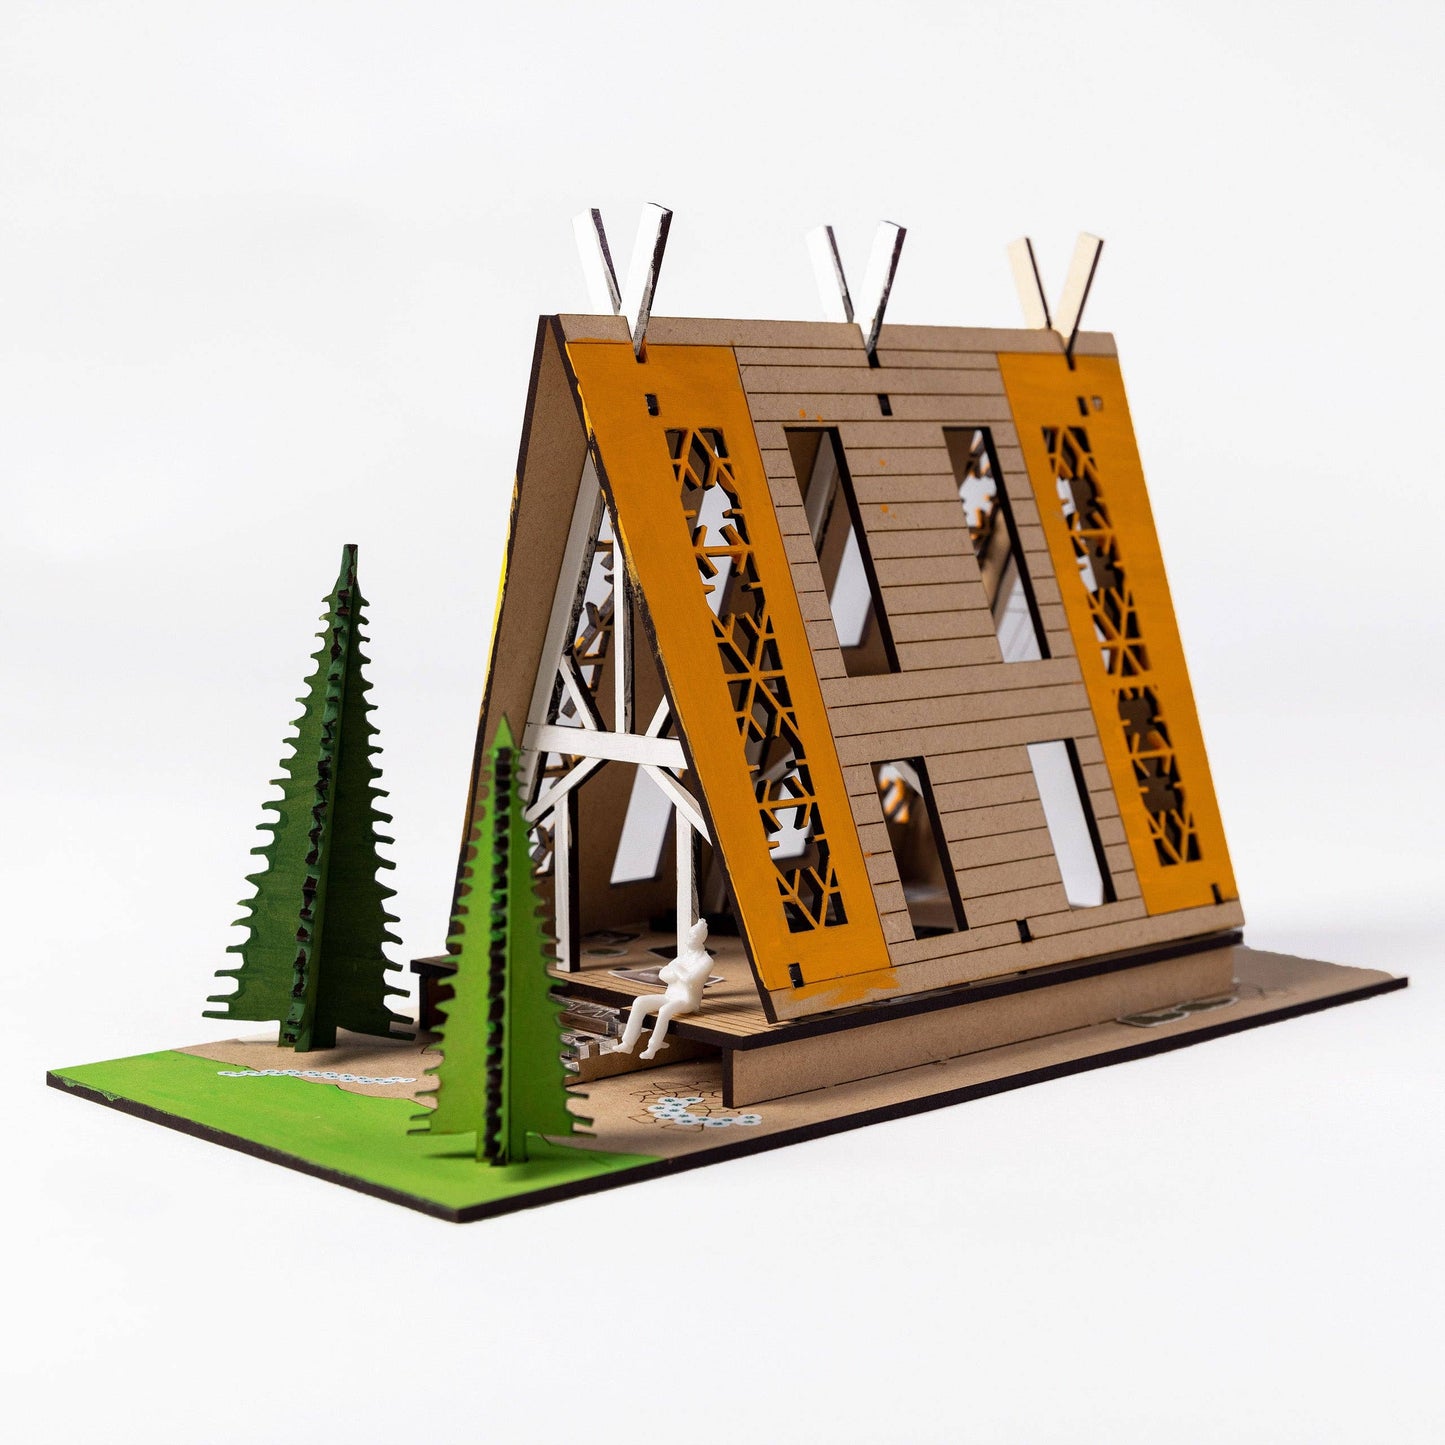 Evergreen Cabin Architecture Model Making Kit